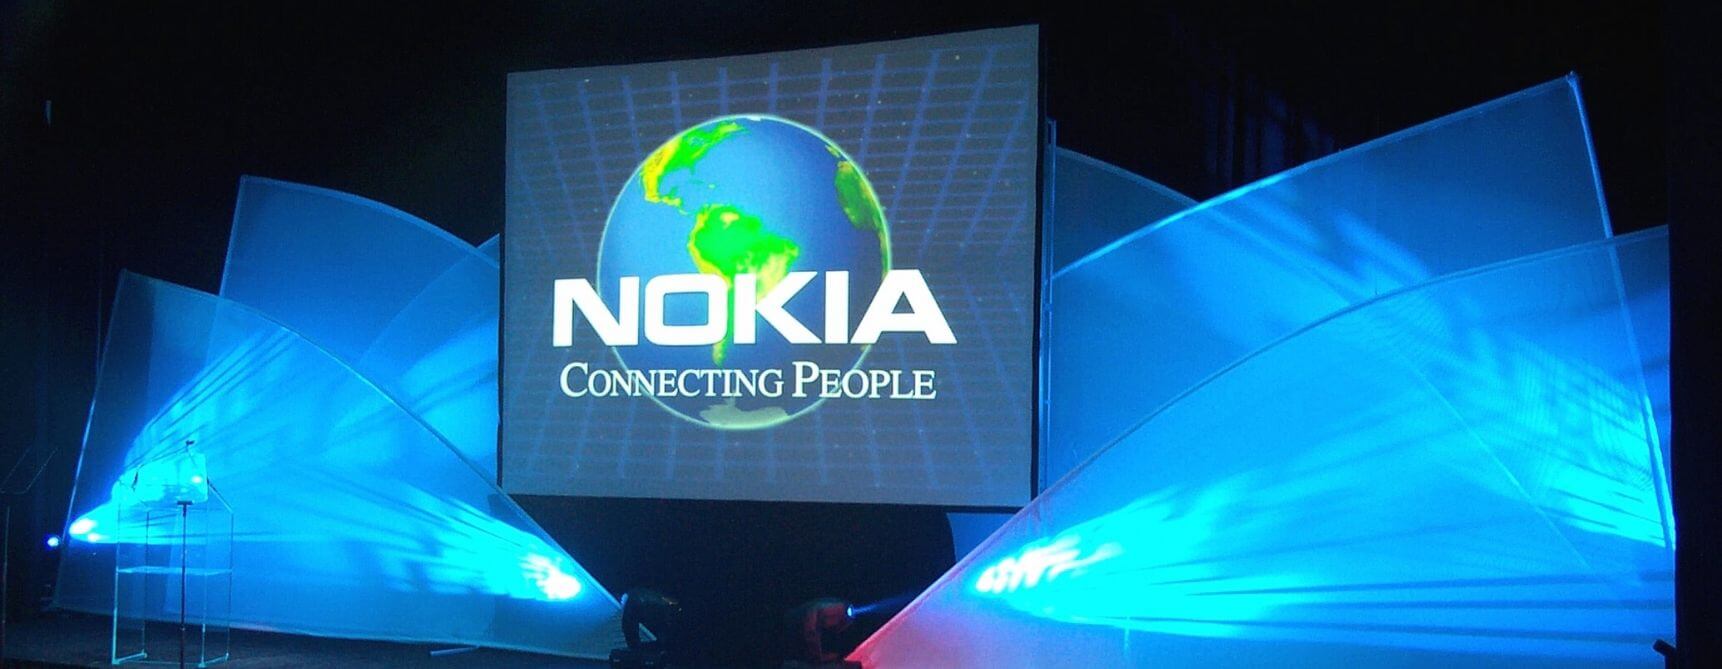 9 Nokia Corporate Event